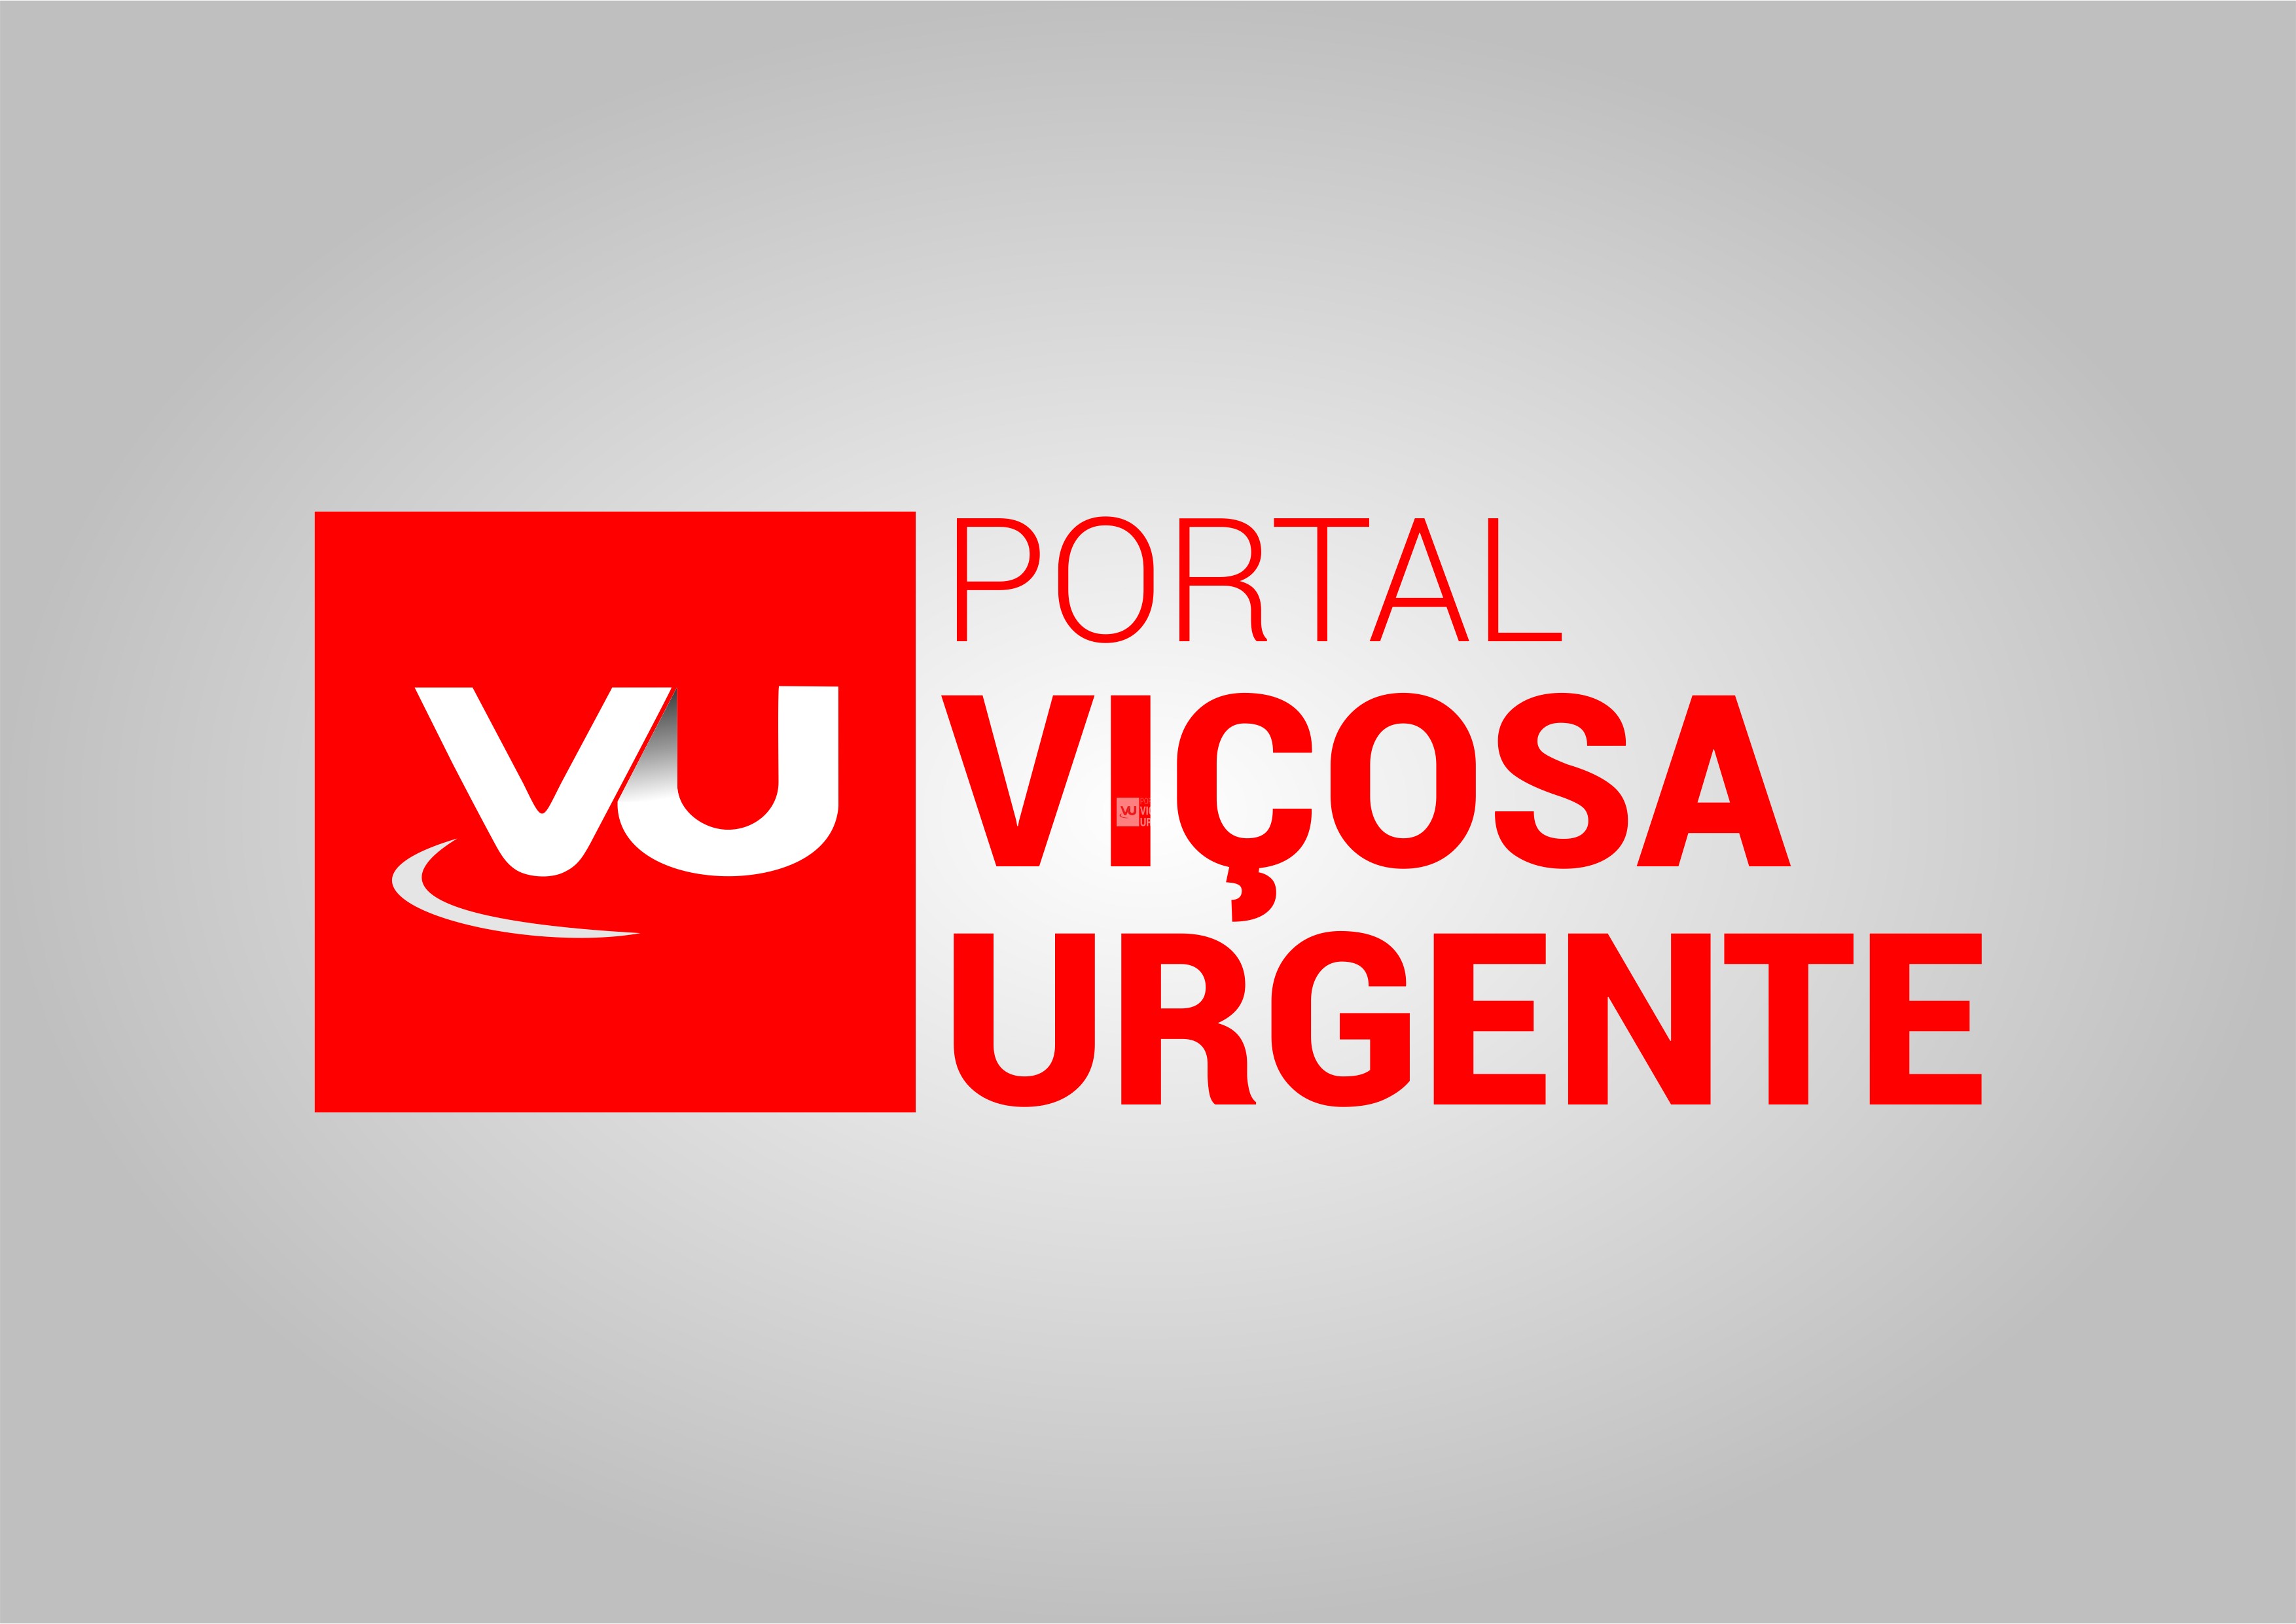 (c) Vicosaurgente.com.br